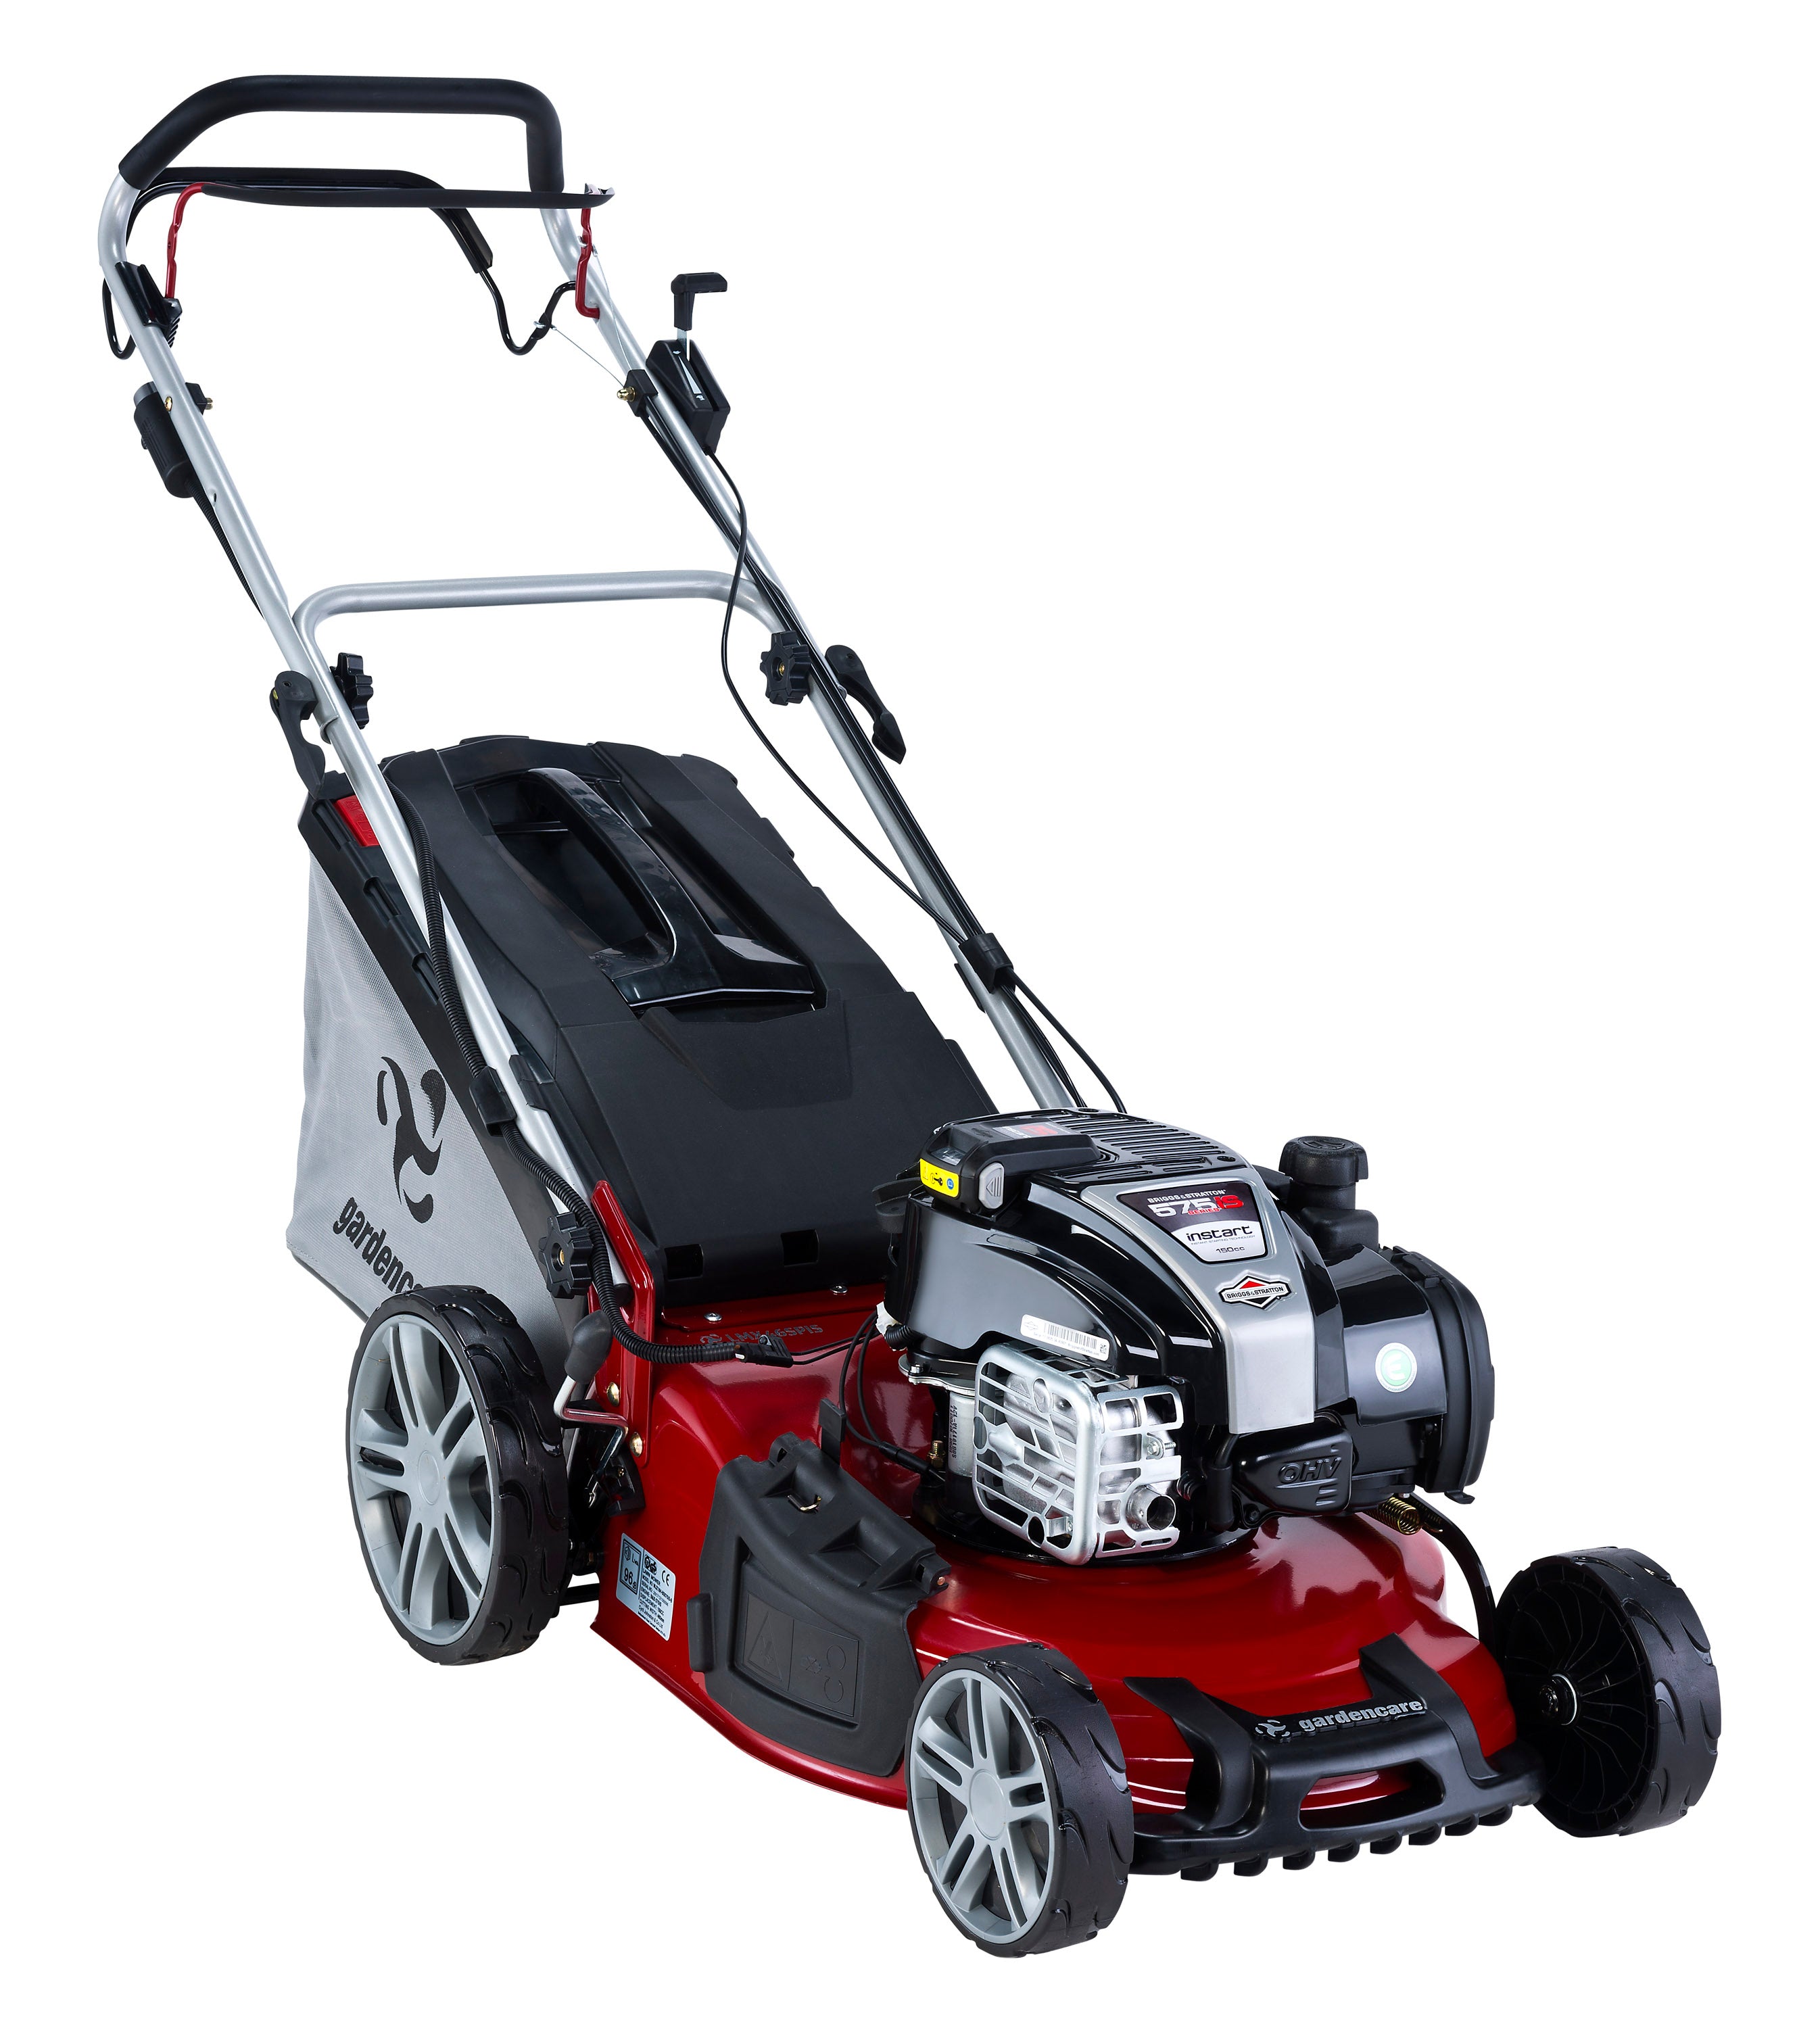 Gardencare LMX46SP IS 46cm lawn mower